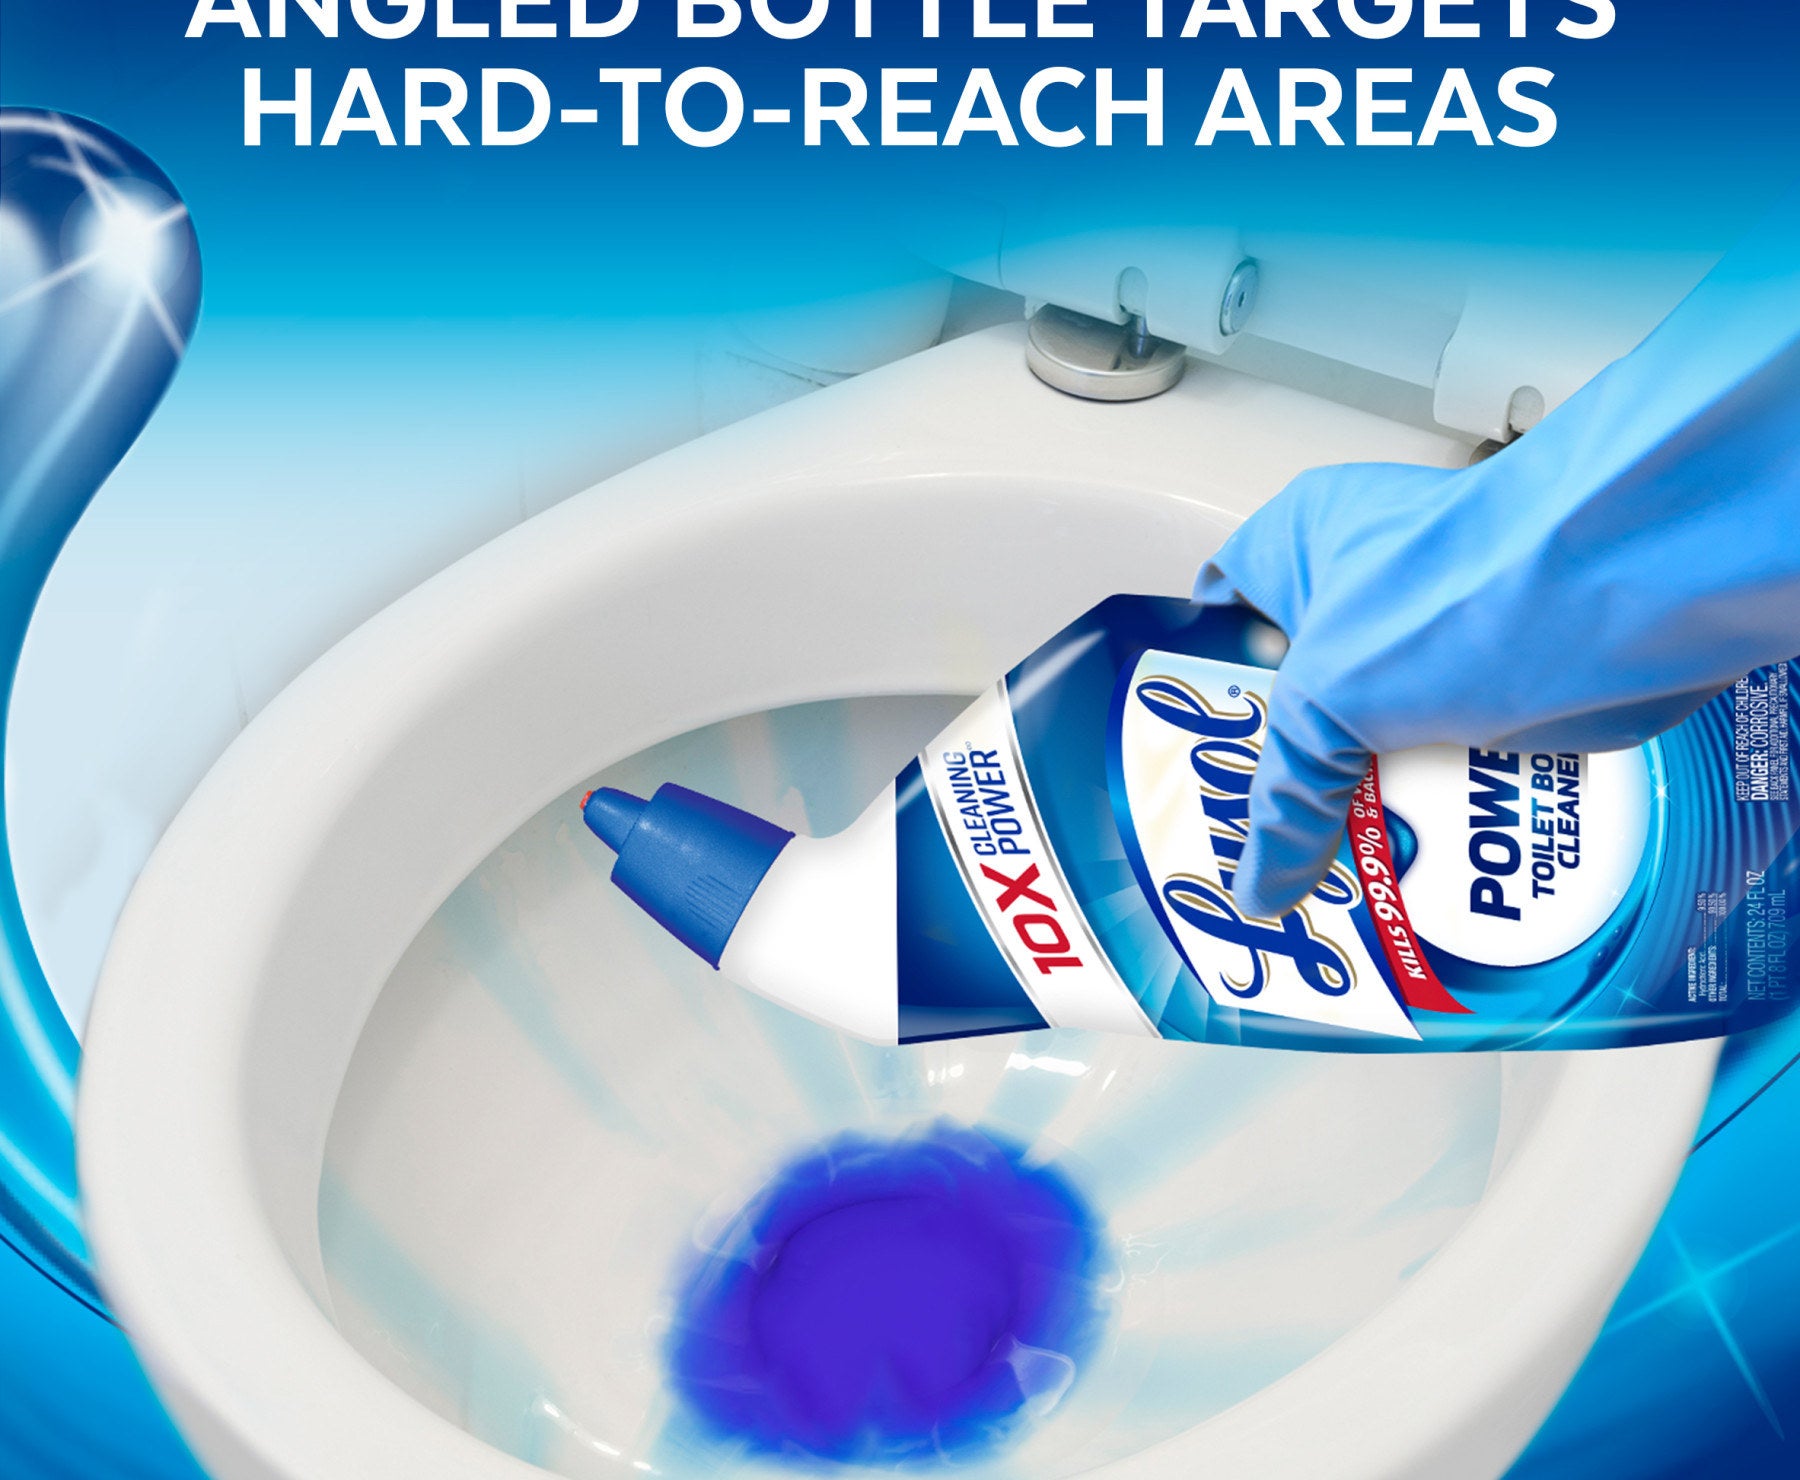 the blue Lysol toilet bowl cleaner inside white toilet bowl